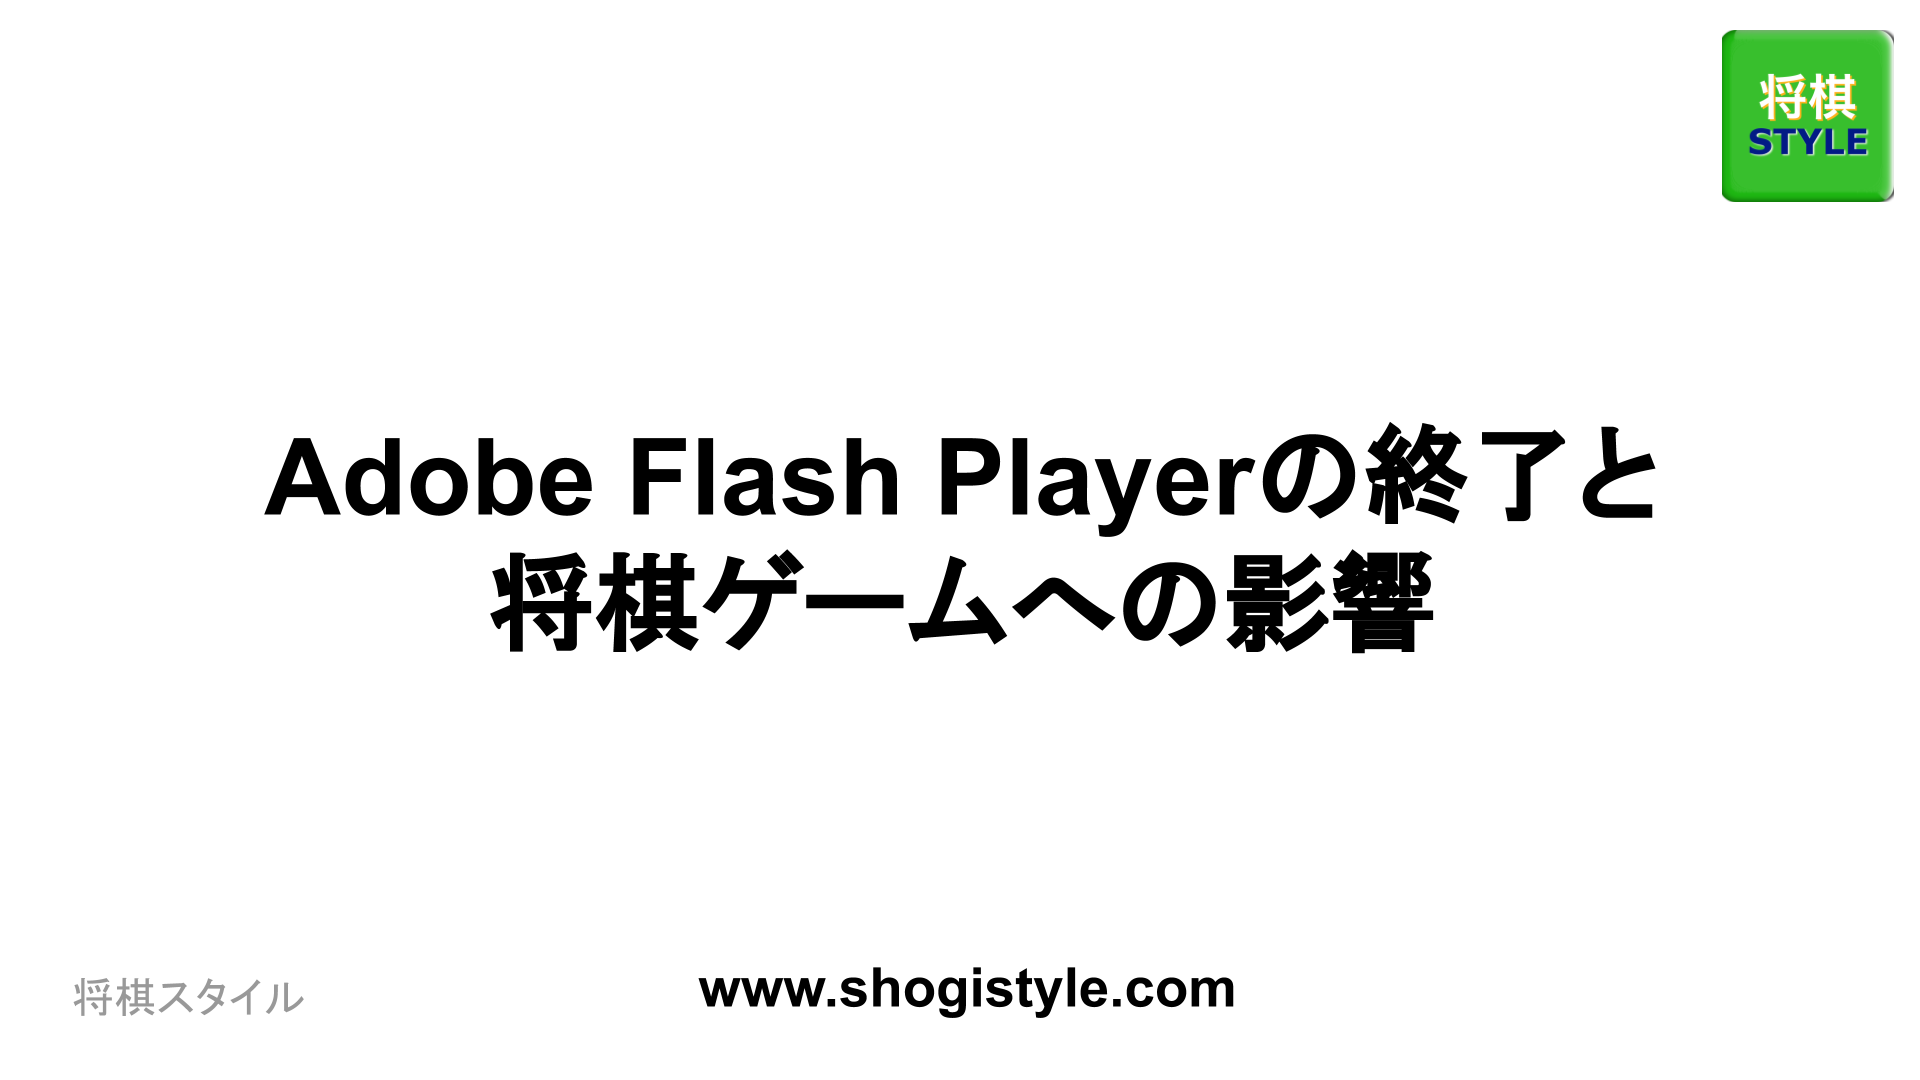 Adobe Flash Playerの終了と将棋ゲームへの影響